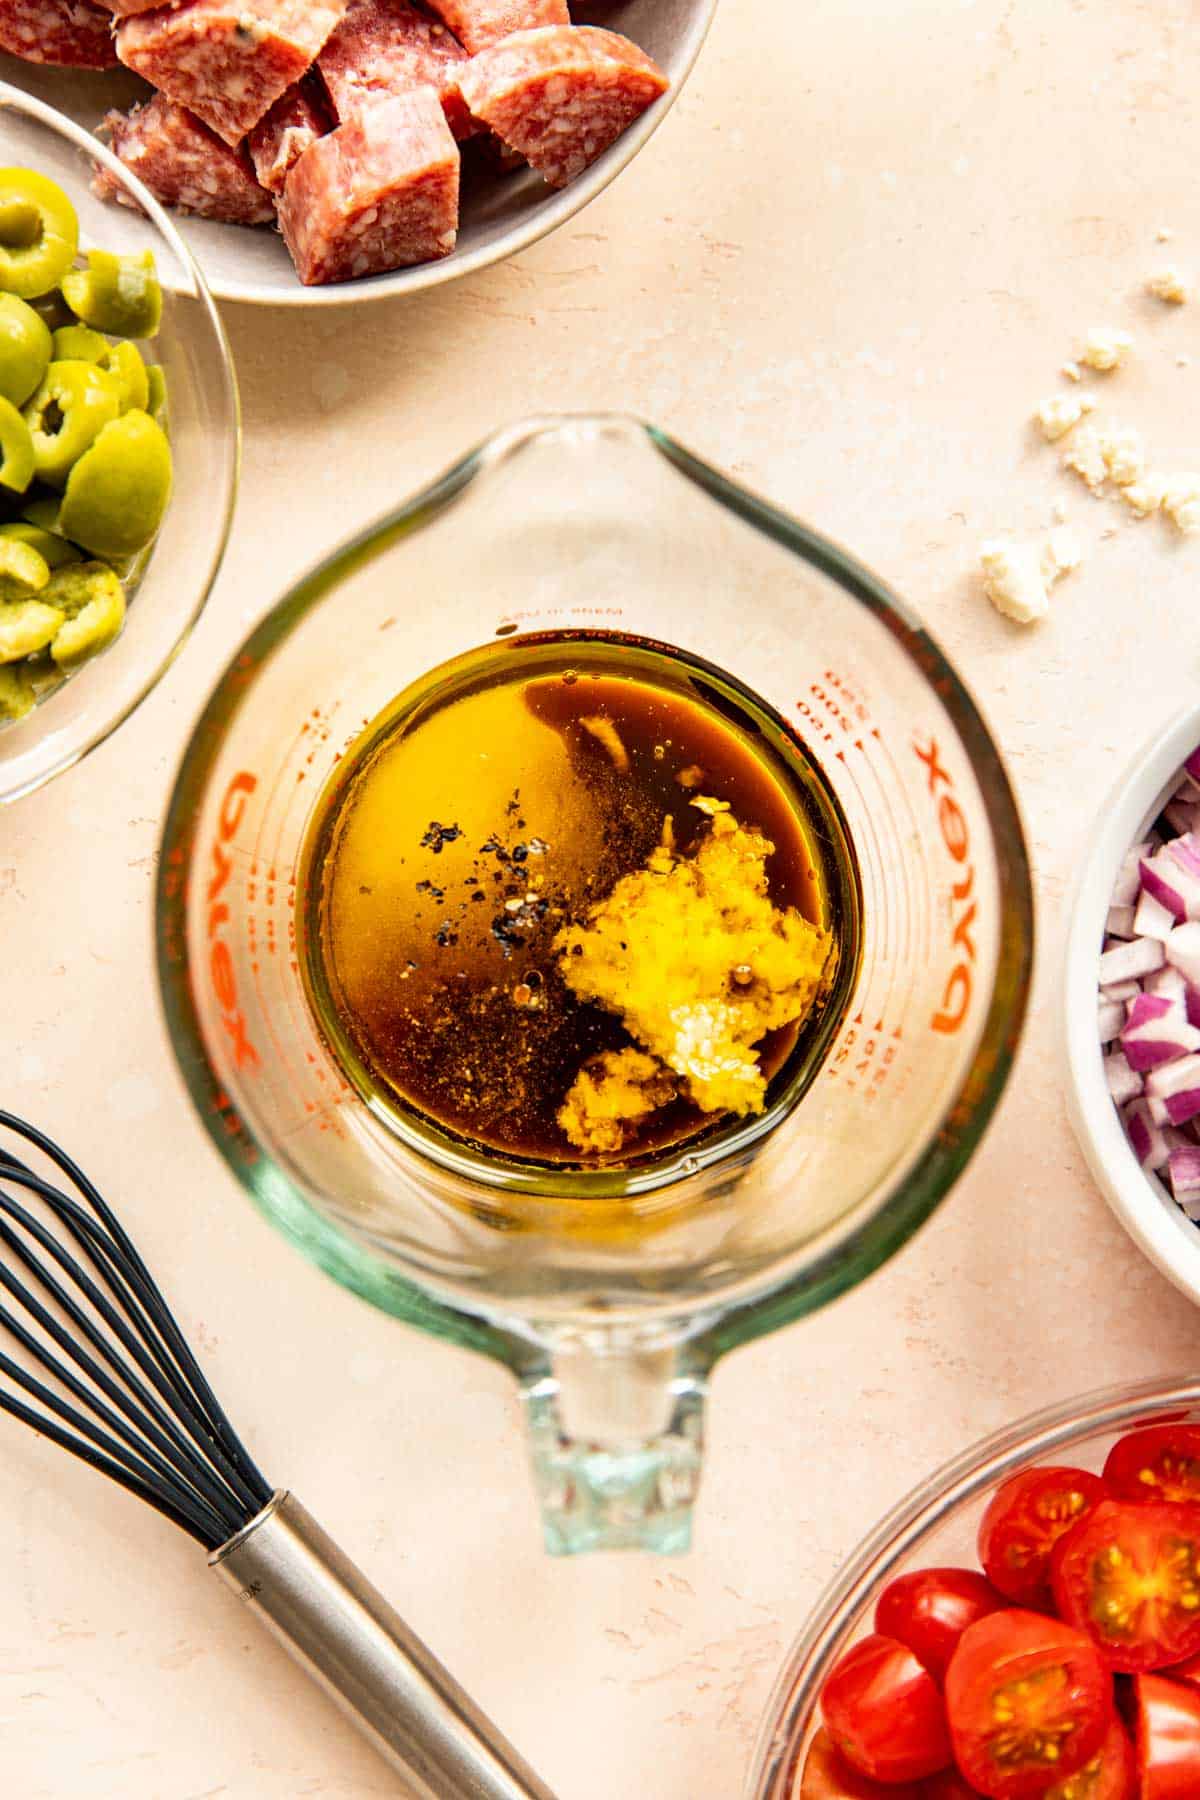 olive oil, balsamic vinegar, garlic, and seasonings in a glass measuring cup